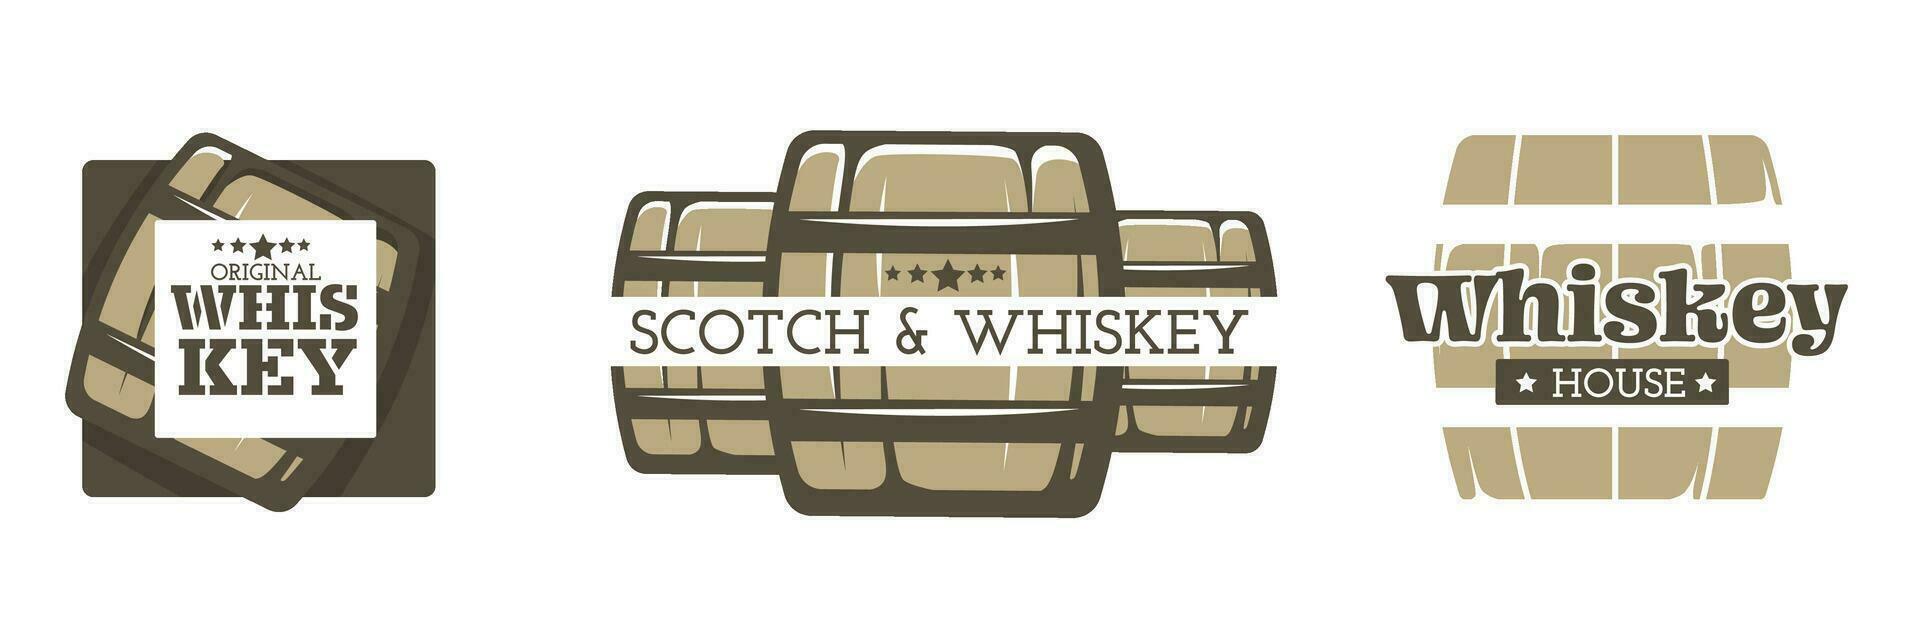 escocés y whisky casa, barriles con alcohol vector